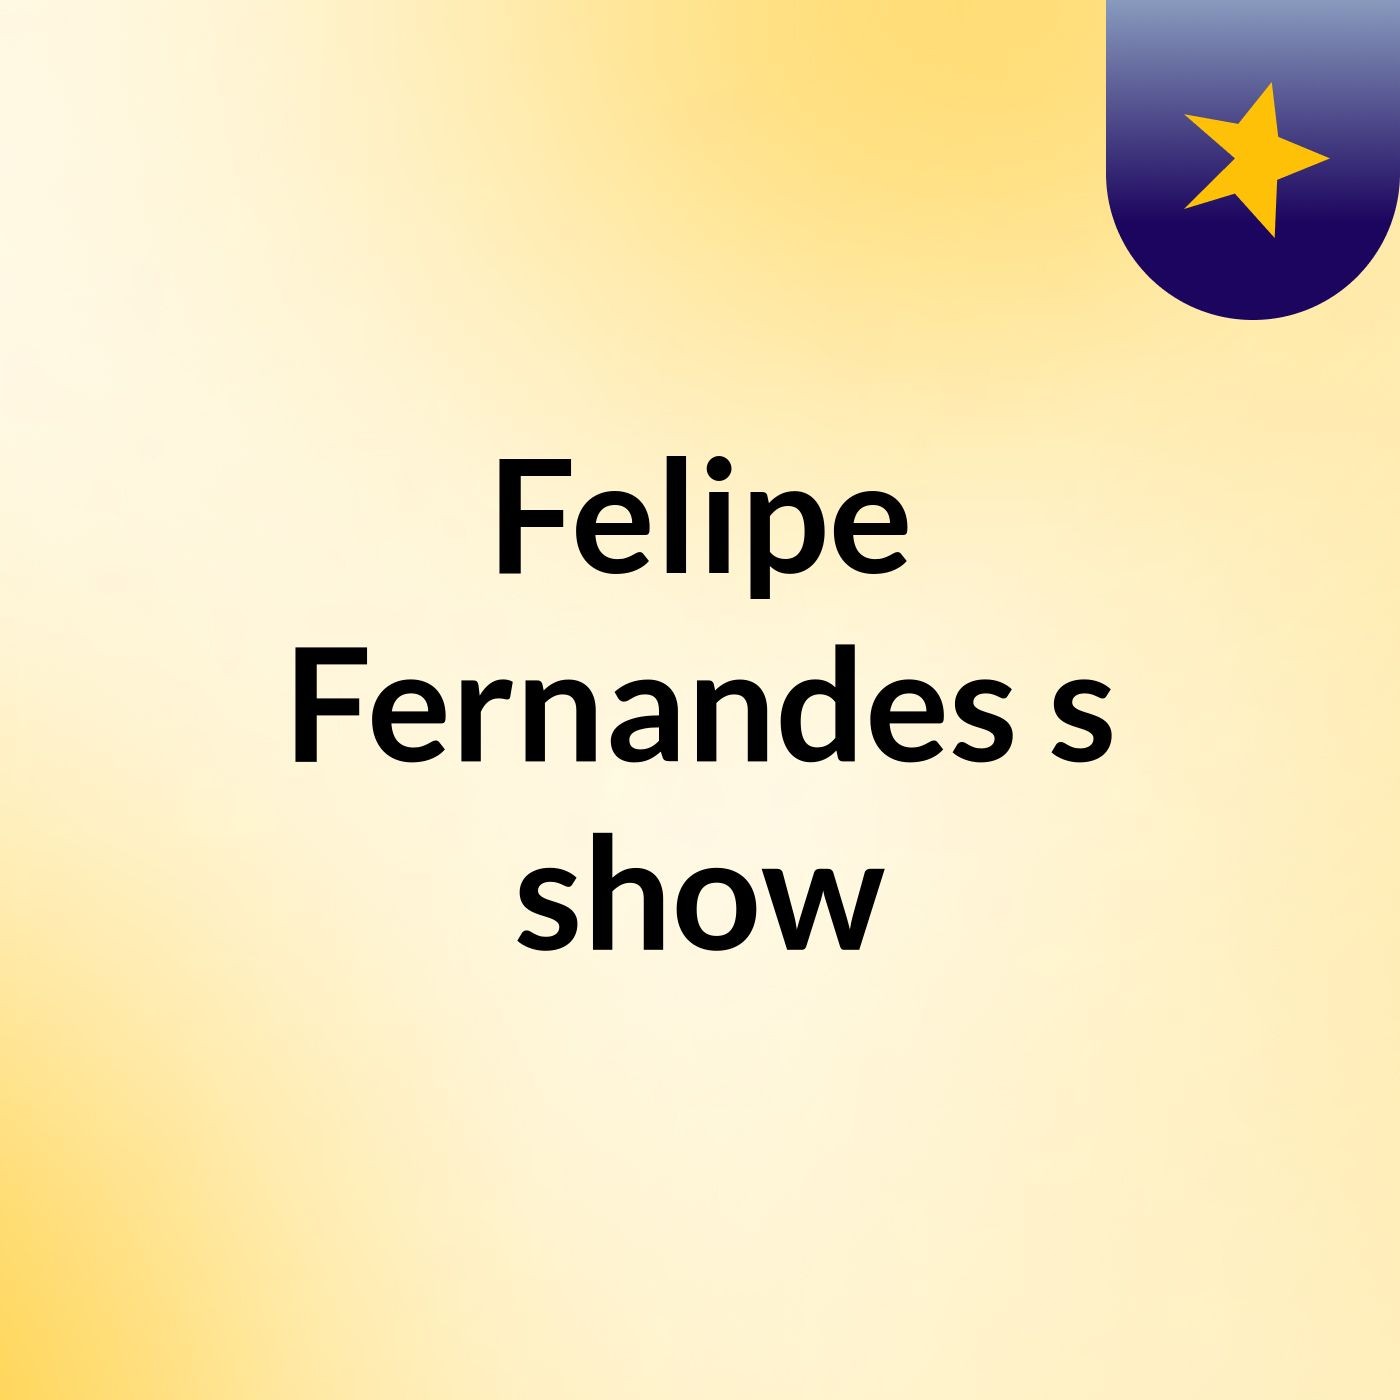 Felipe Fernandes's show